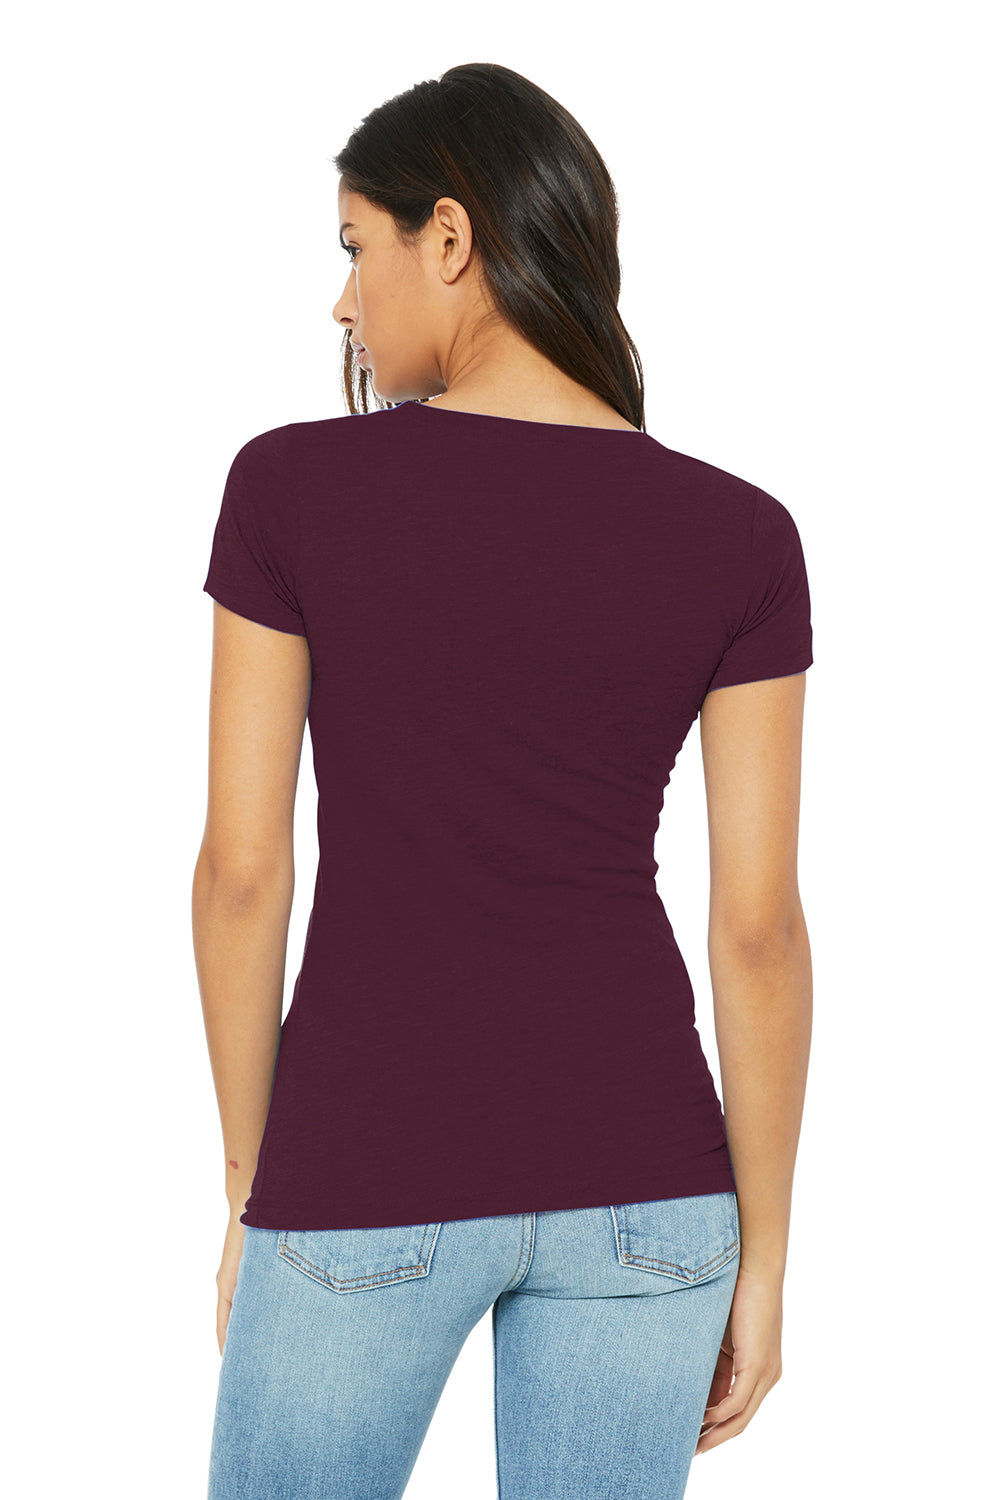 Bella + Canvas BC6004/6004 Womens The Favorite Short Sleeve Crewneck T-Shirt Maroon Model Back